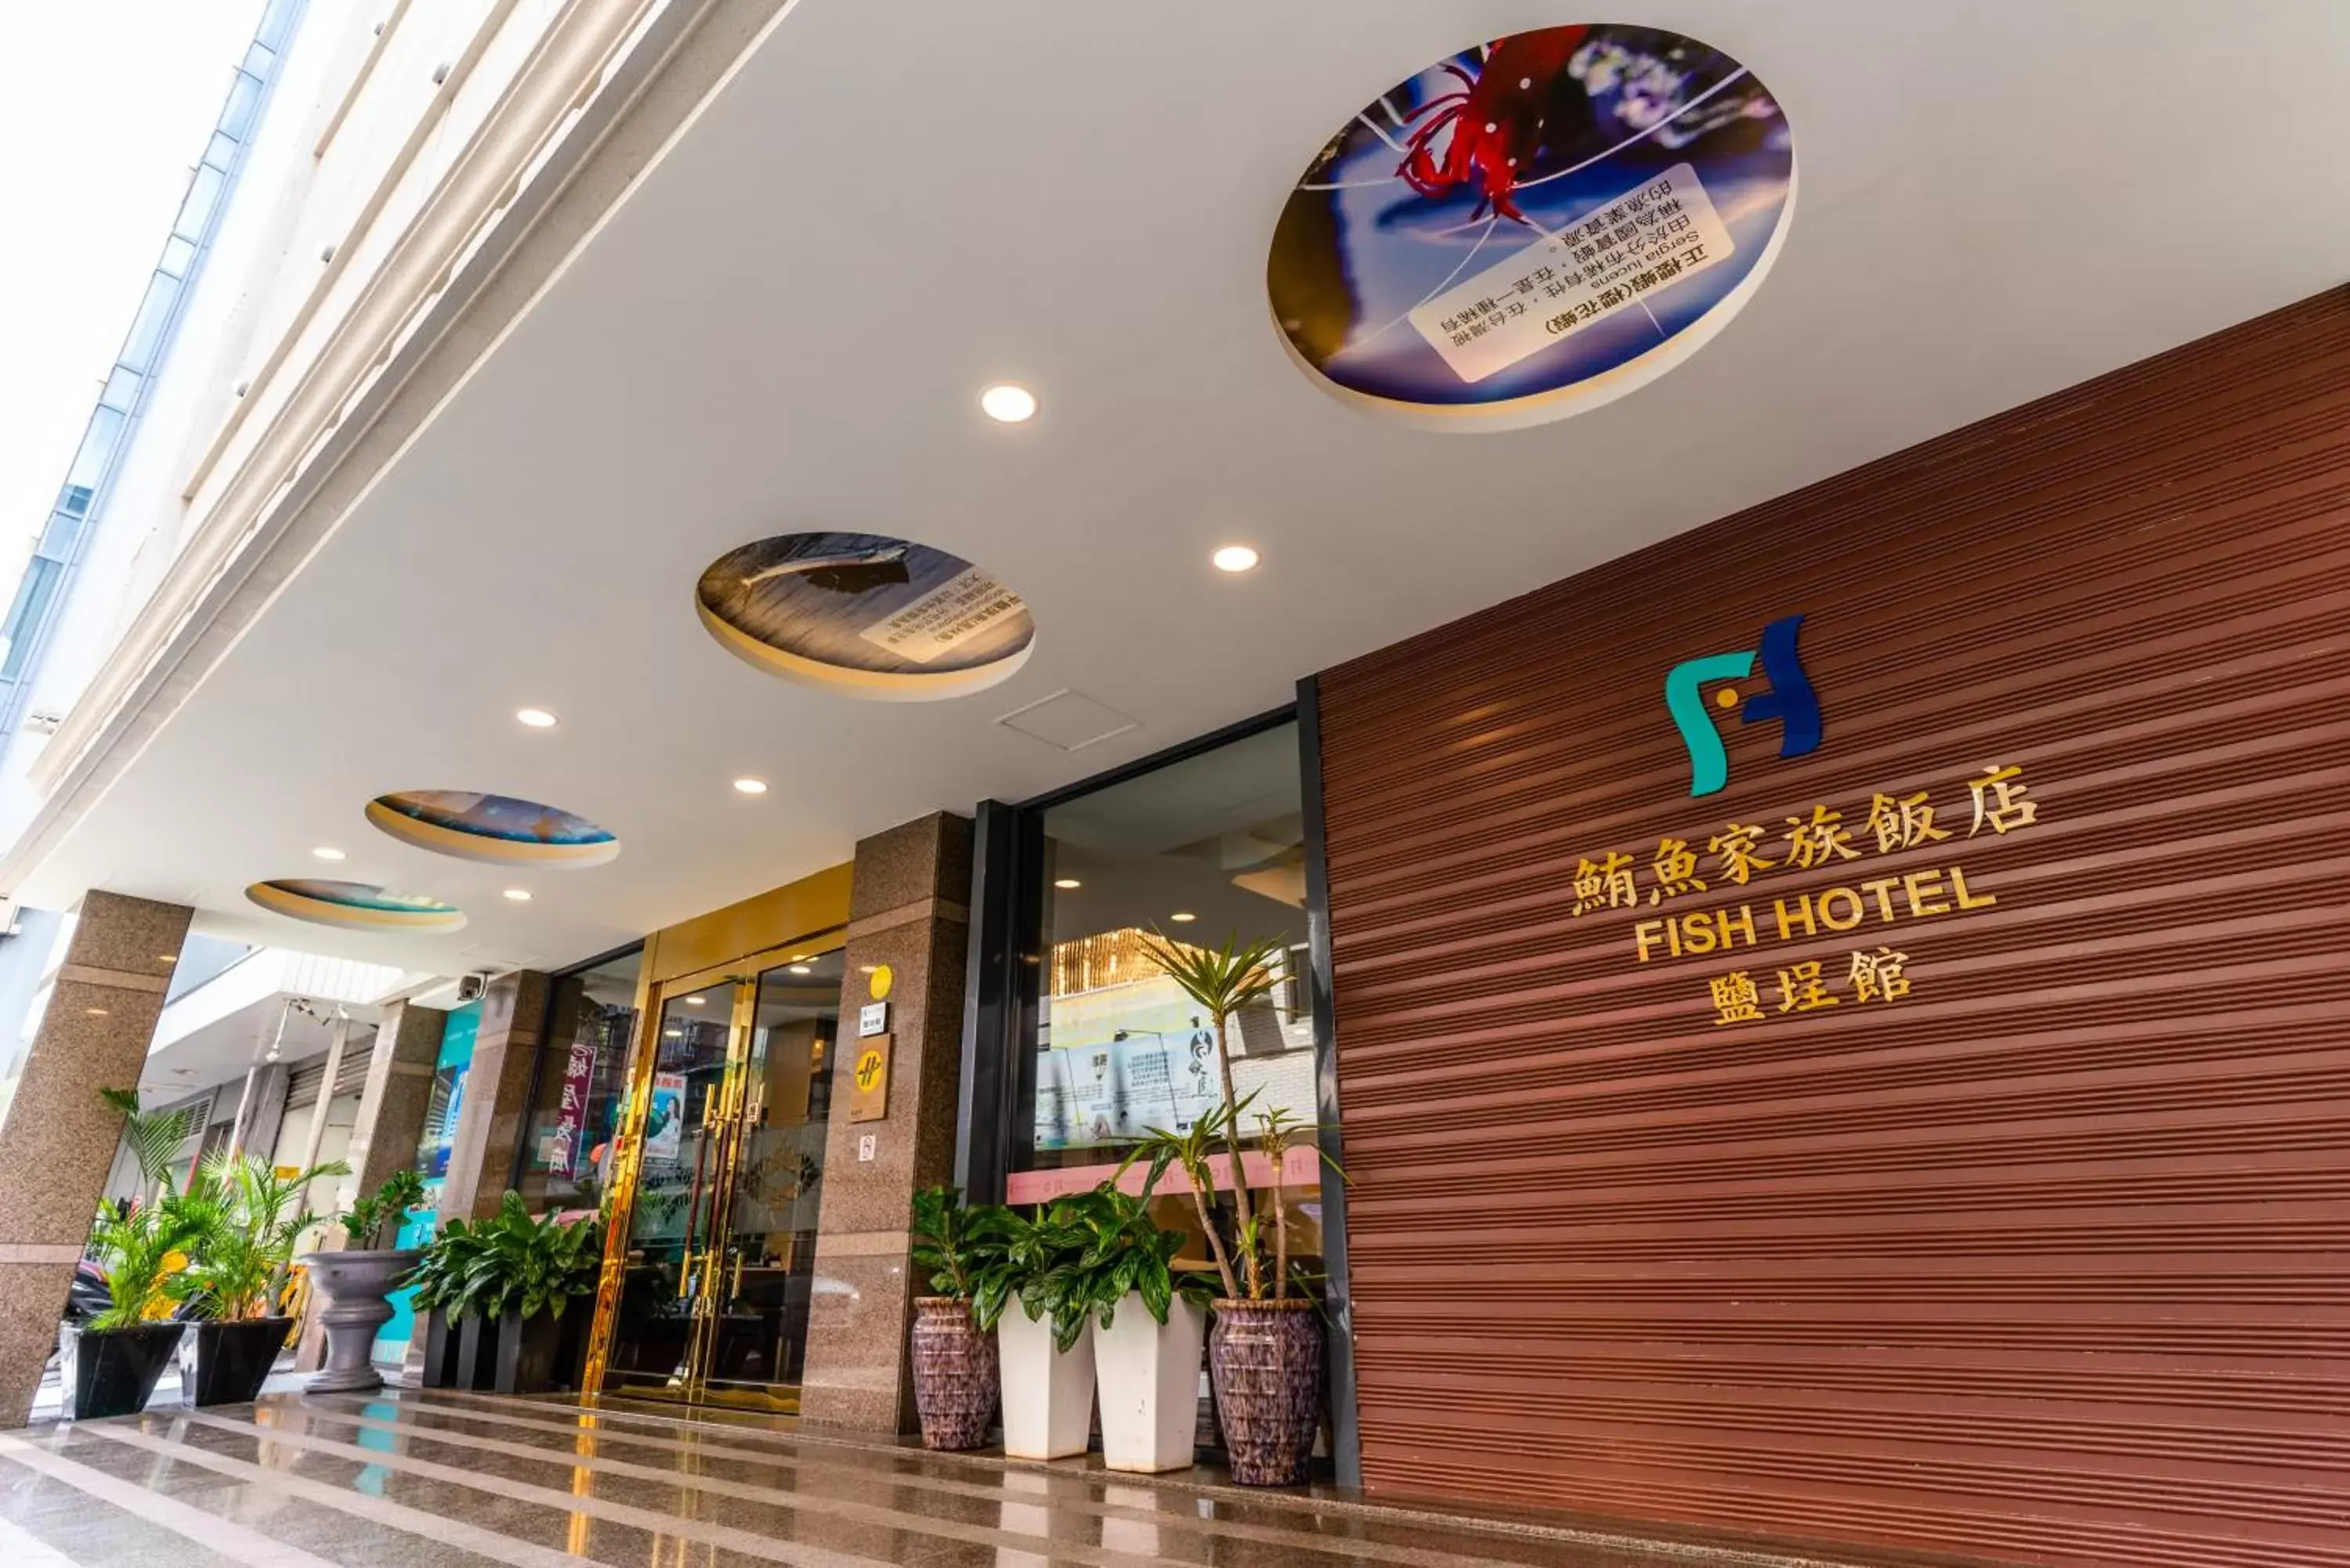 Facade/entrance in Fish Hotel - Yancheng